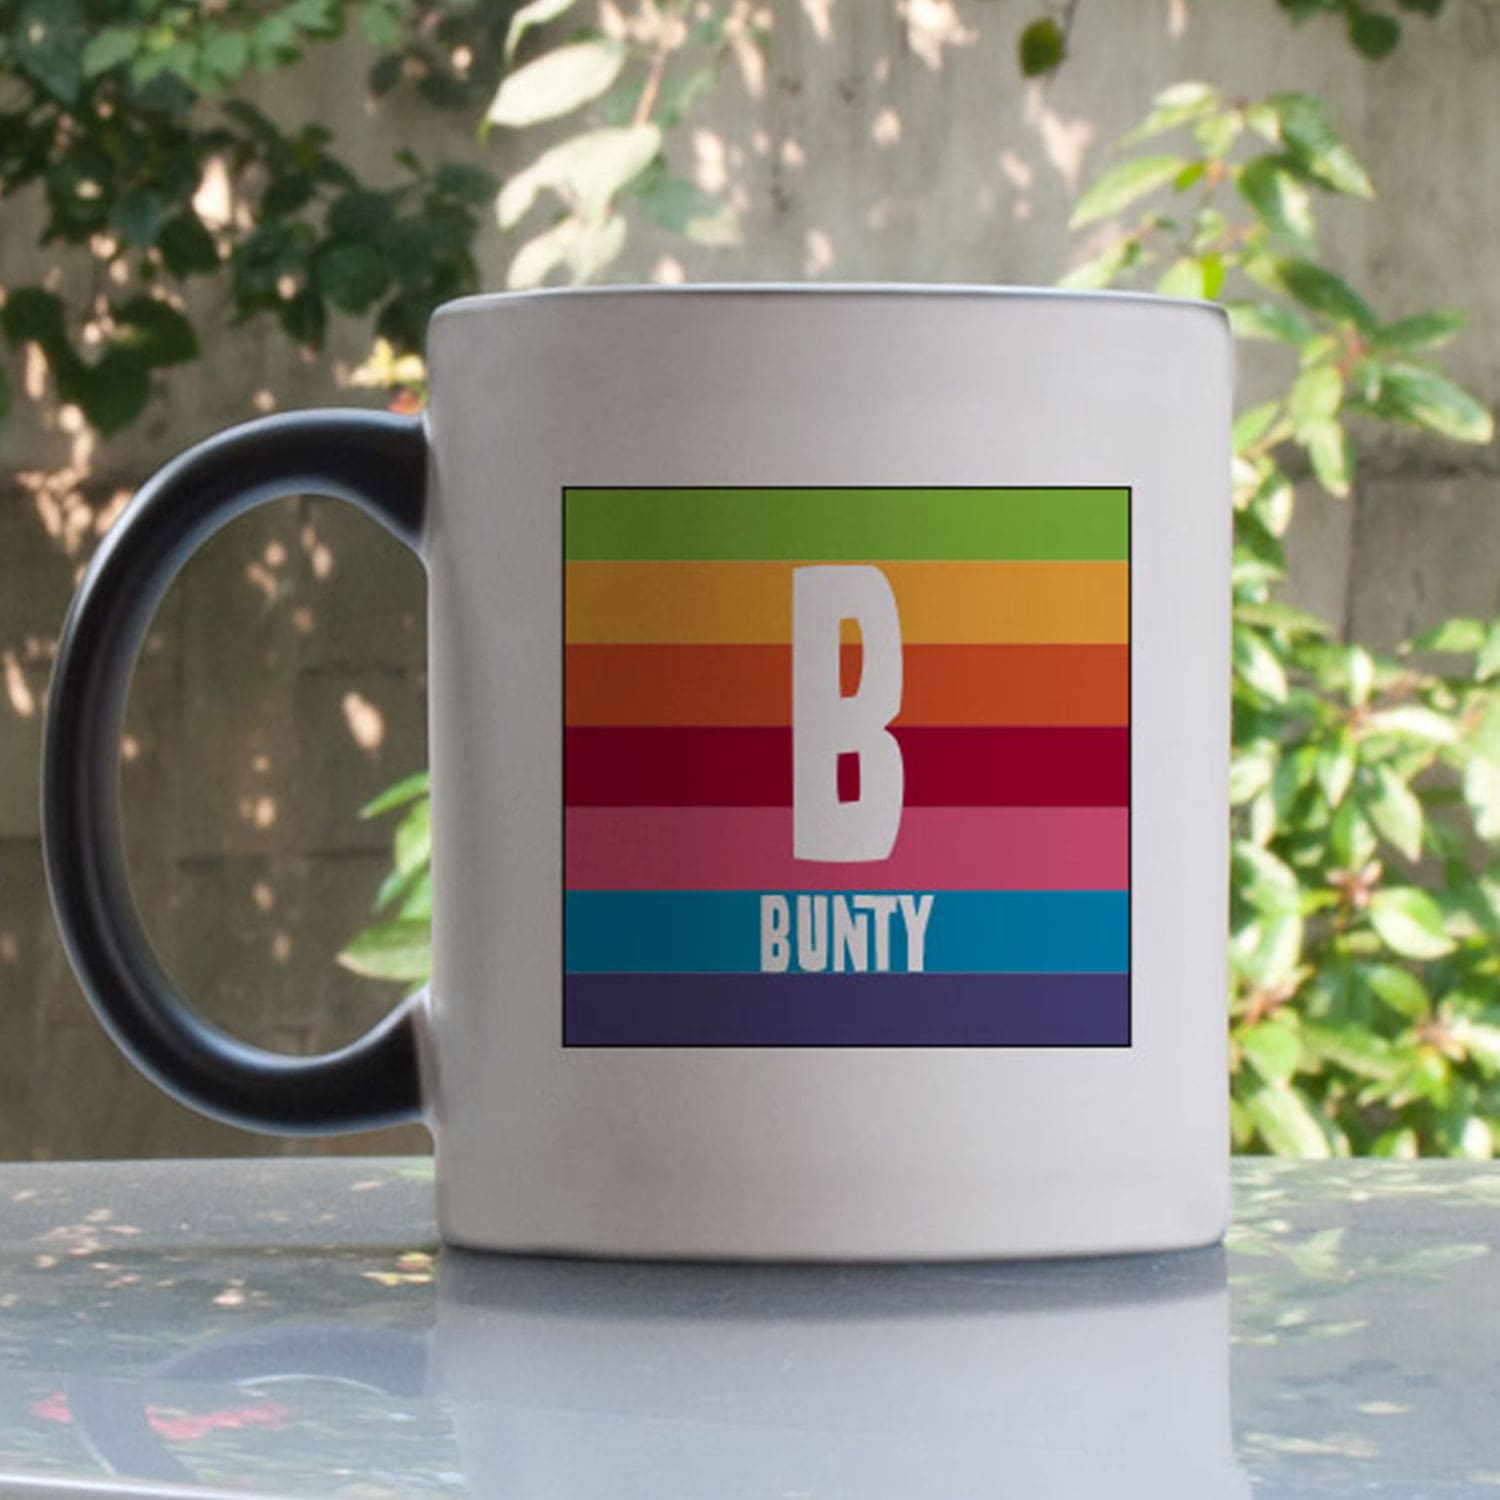 Bunty And Bubly Personalized Magic Mug